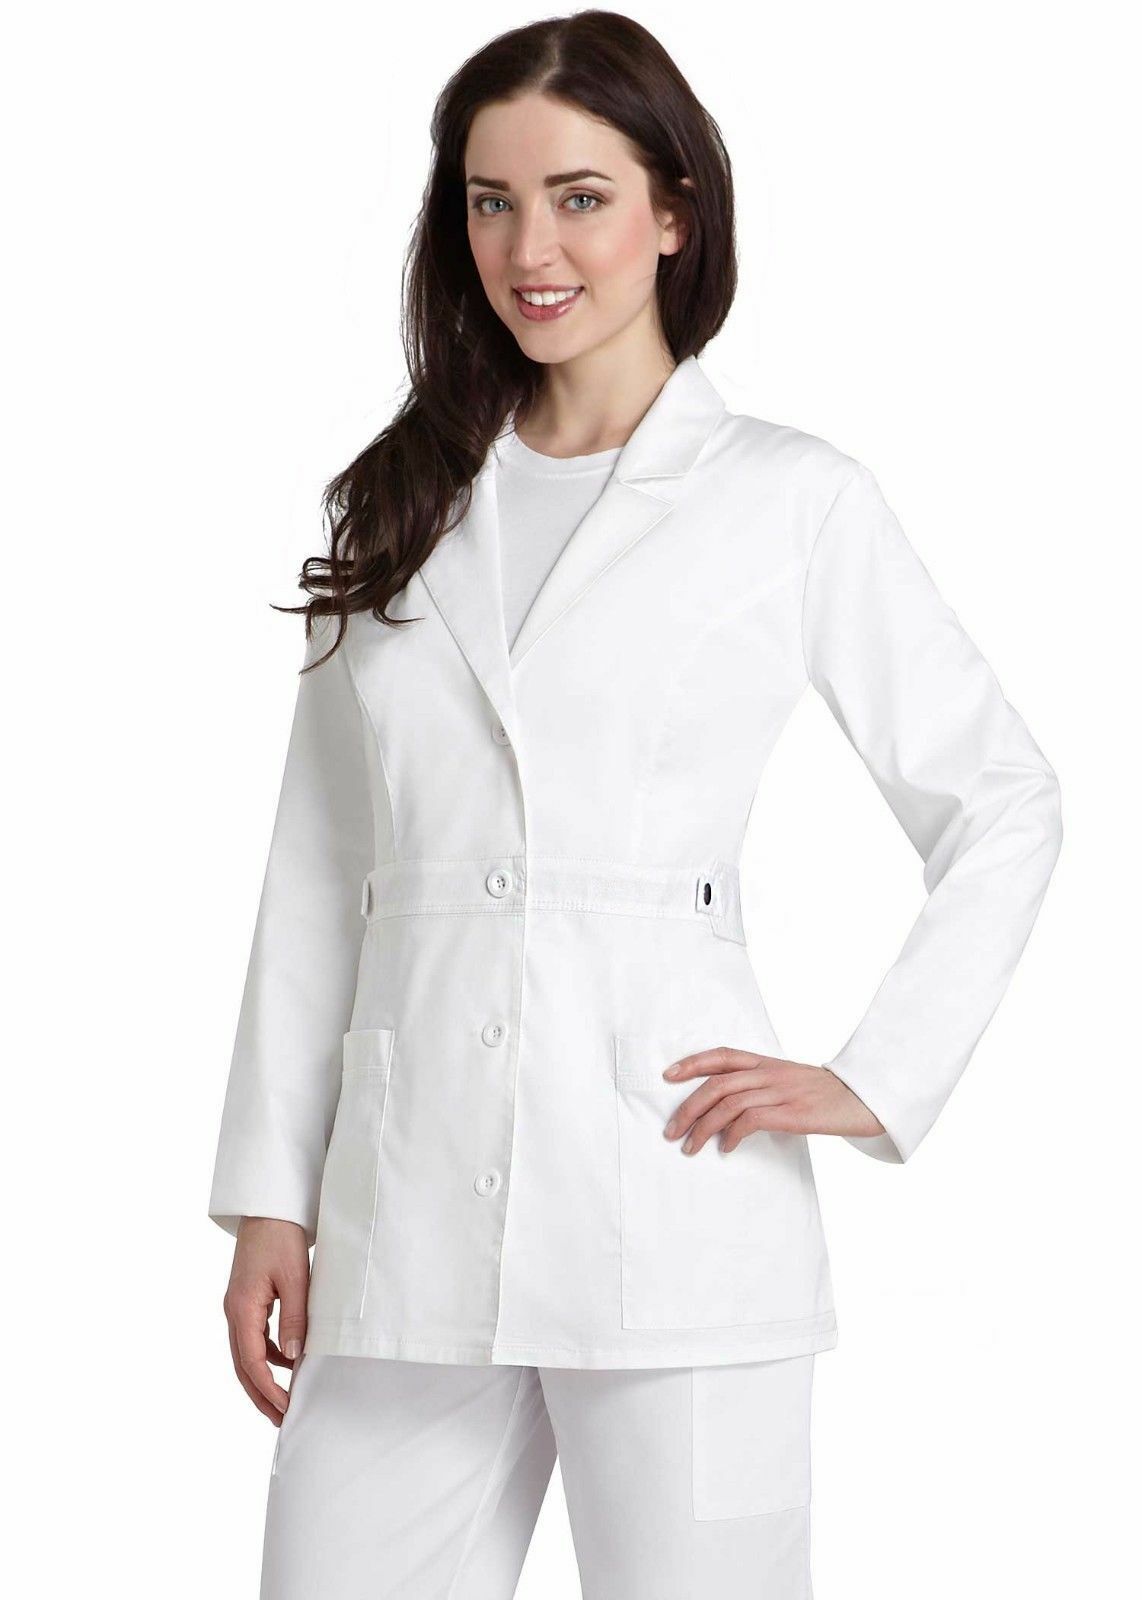 Stylish Medical White Women Short Lab Coats Xs S M L Xl Women Lab Coat